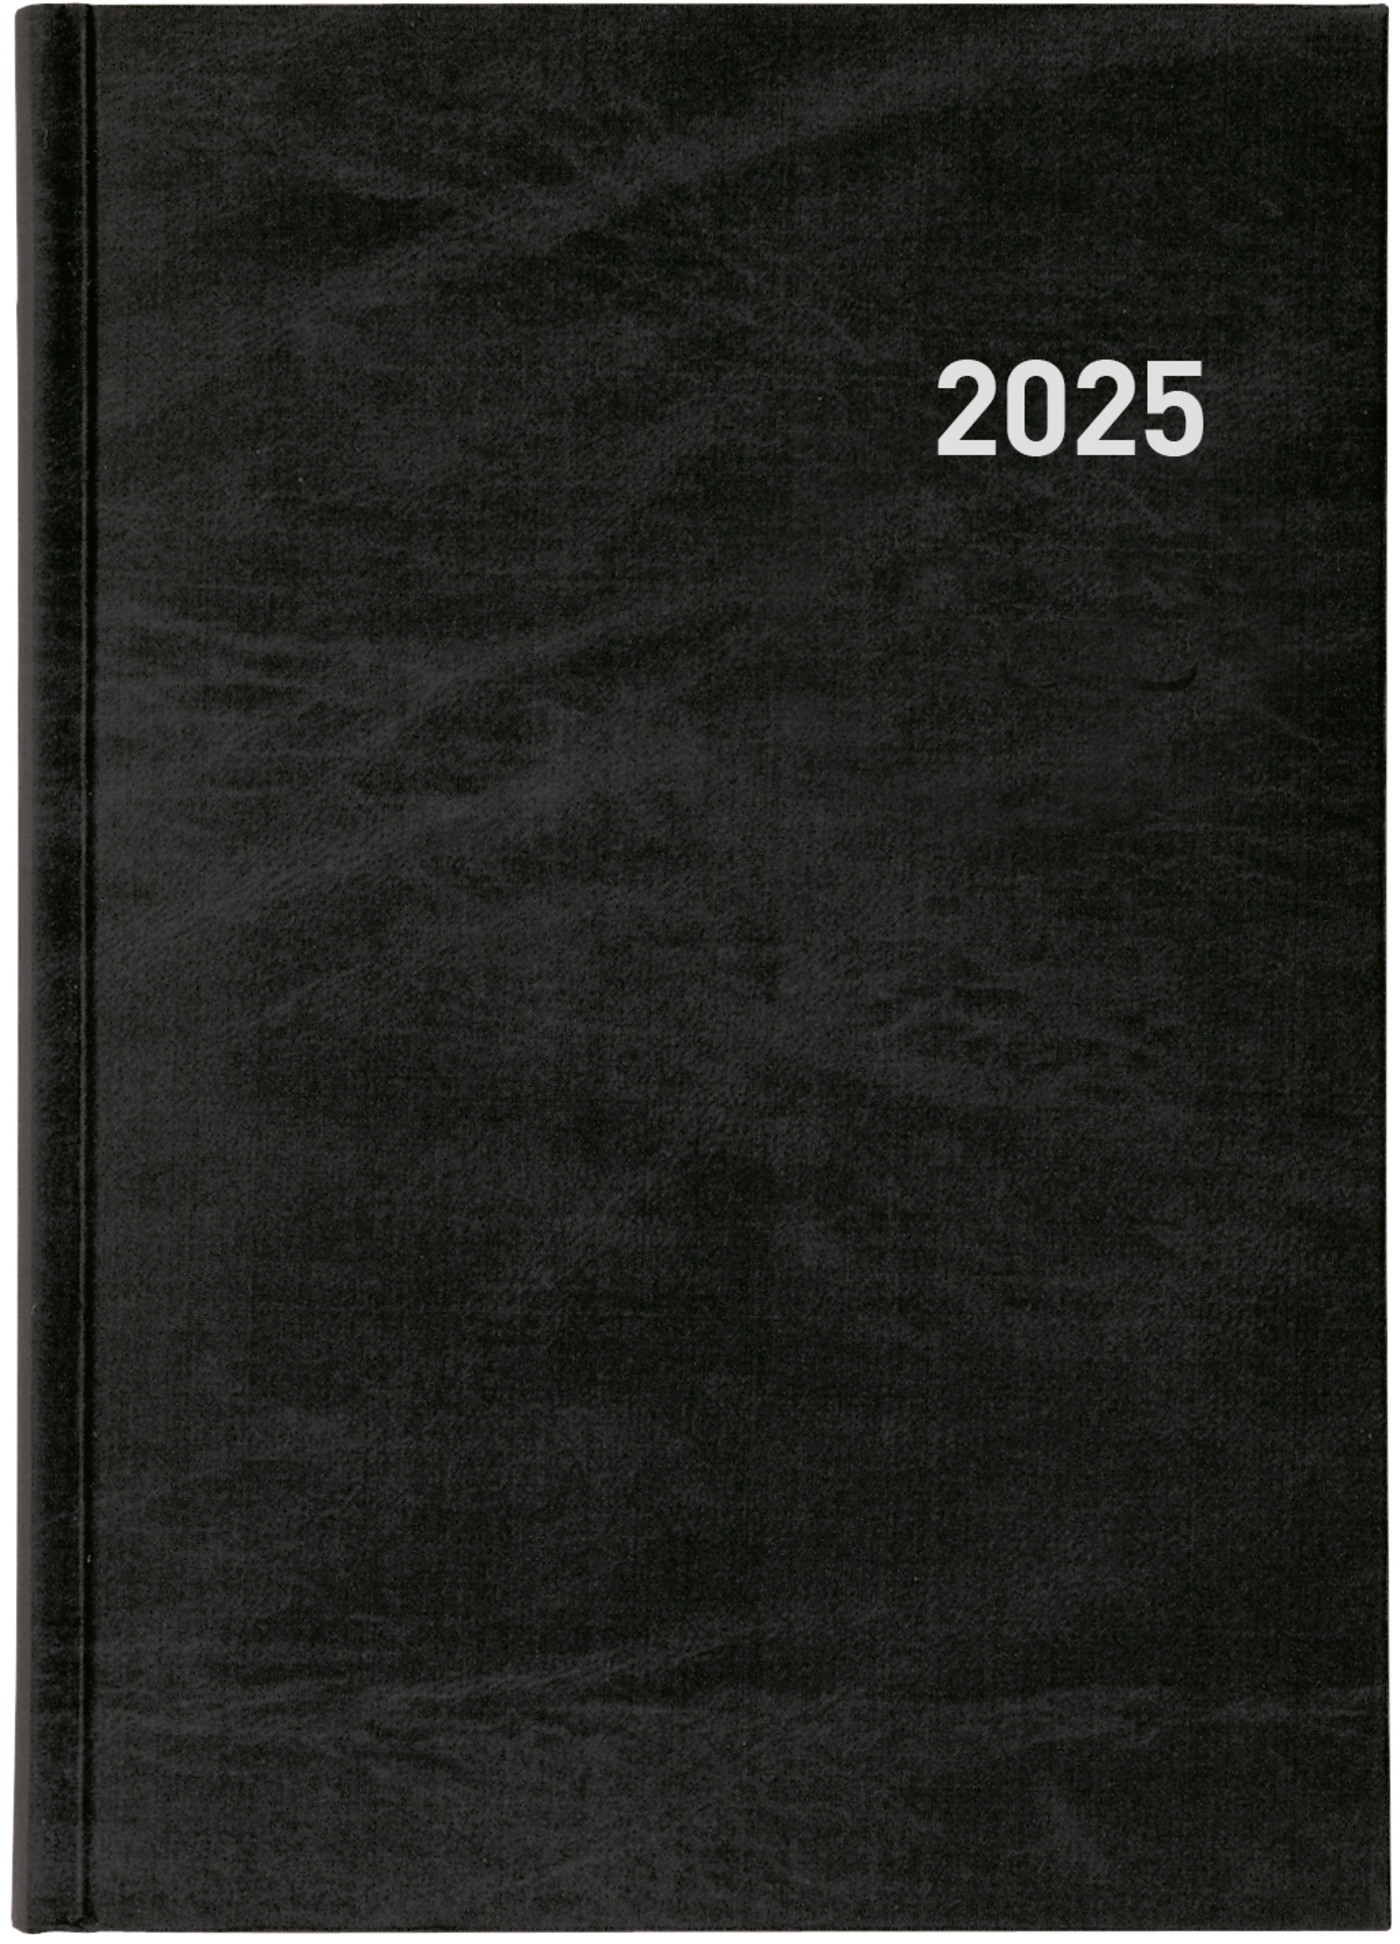 BIELLA Agenda Registra 2025 809501020025 1J/1P noir ML 14.5x20.5cm